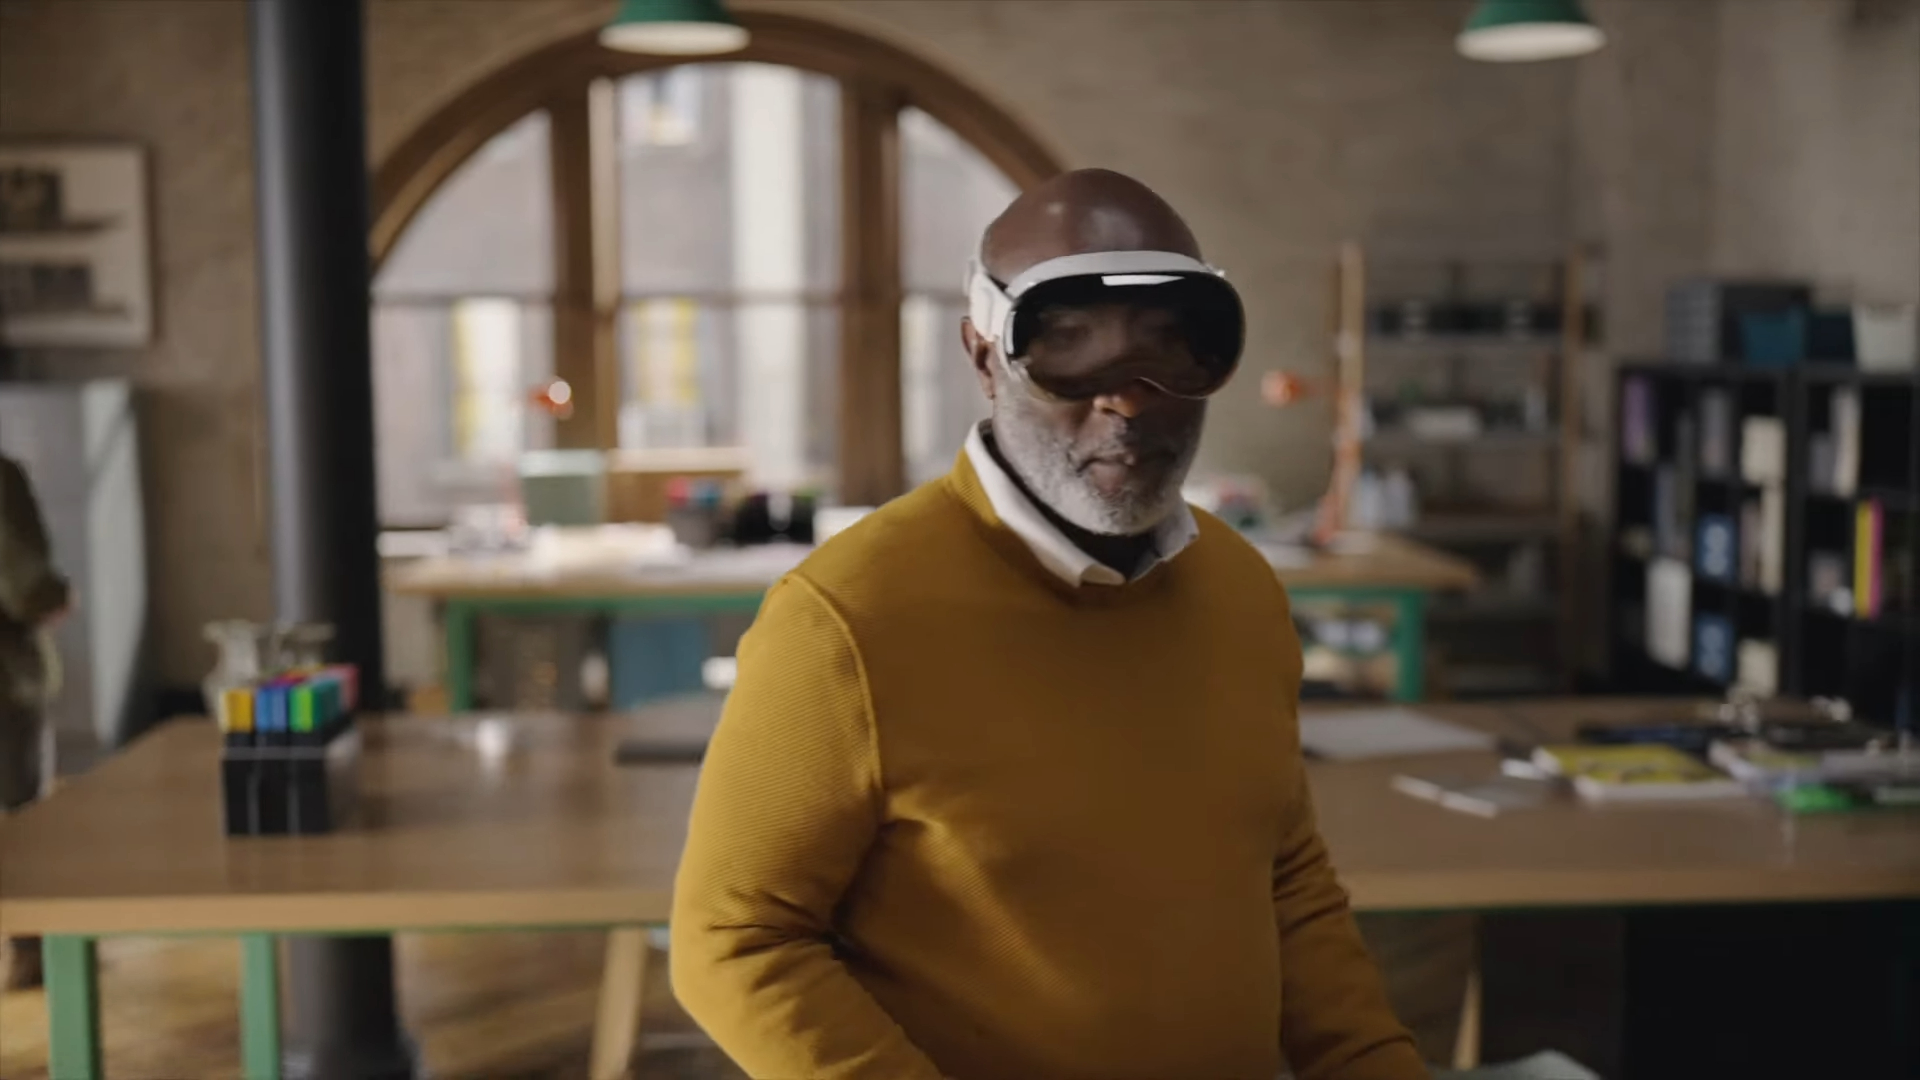 Samsung travaille sur un casque VR capable de suivre le regard - Numerama